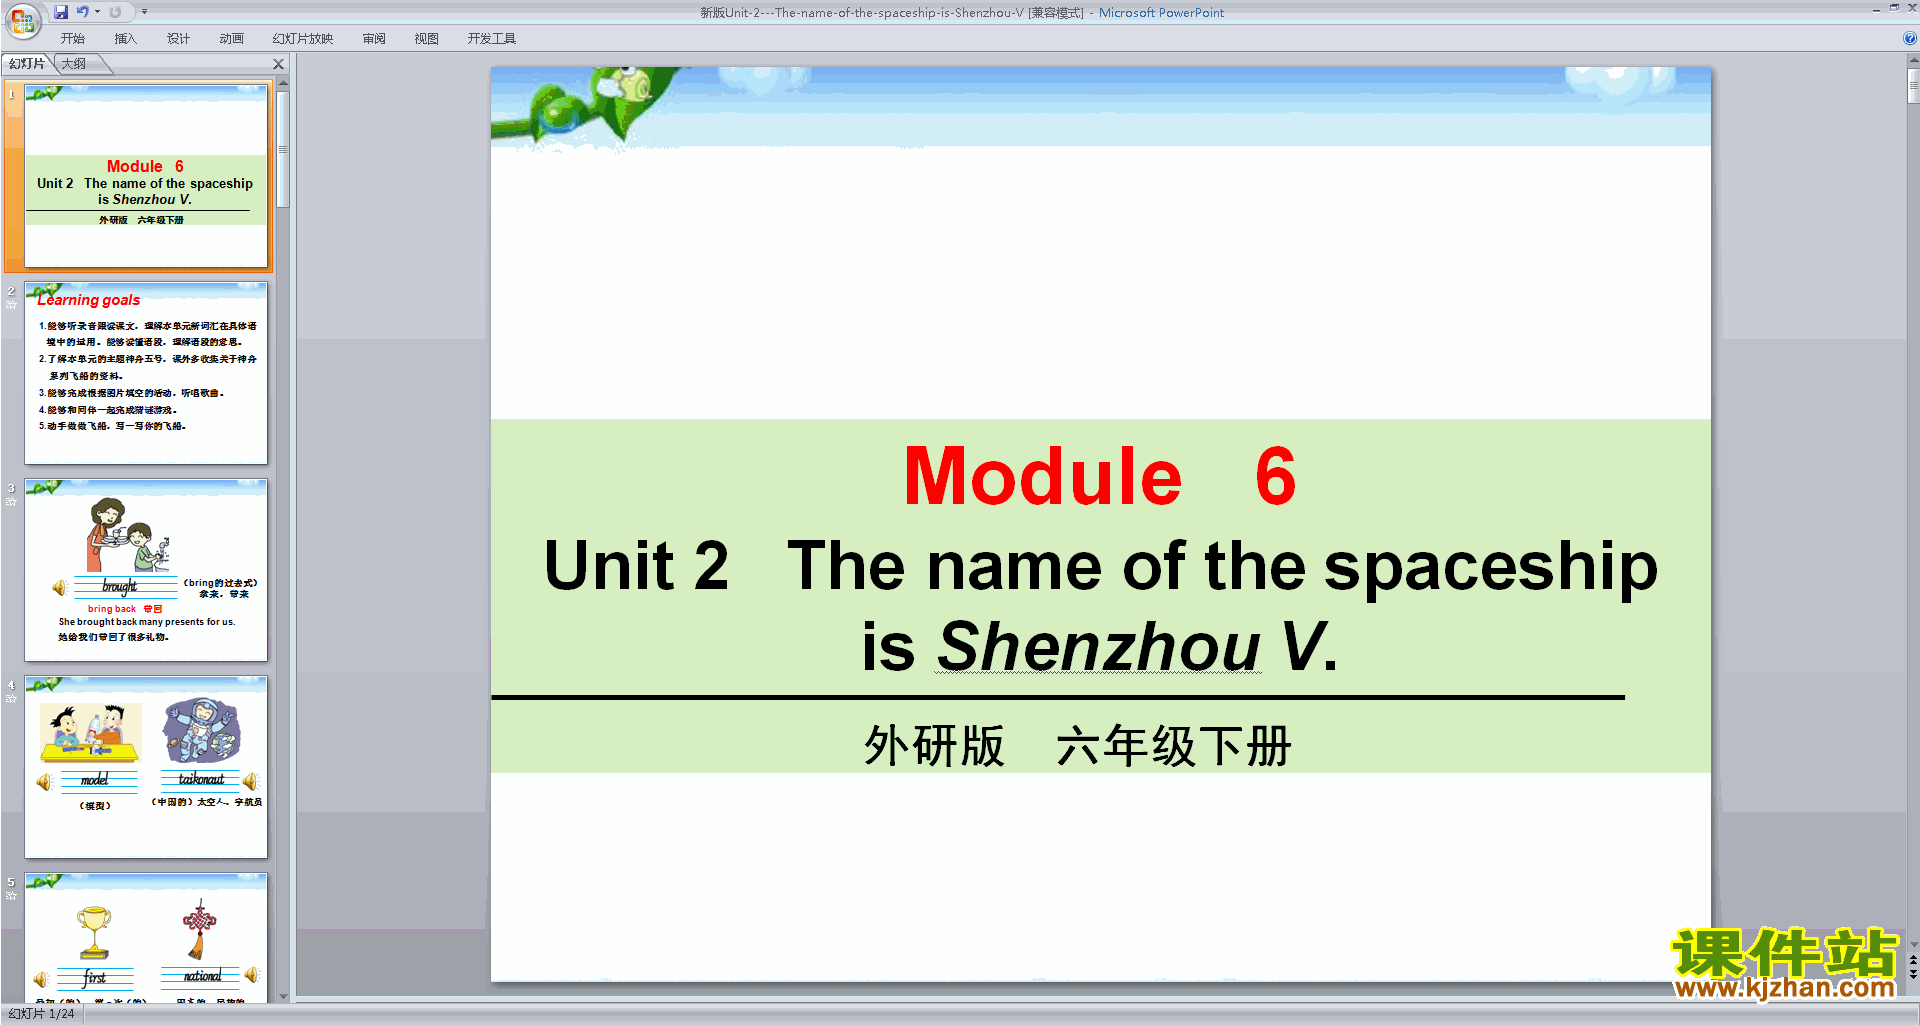 The name of the spaceship is Shenzhou Vpptμ